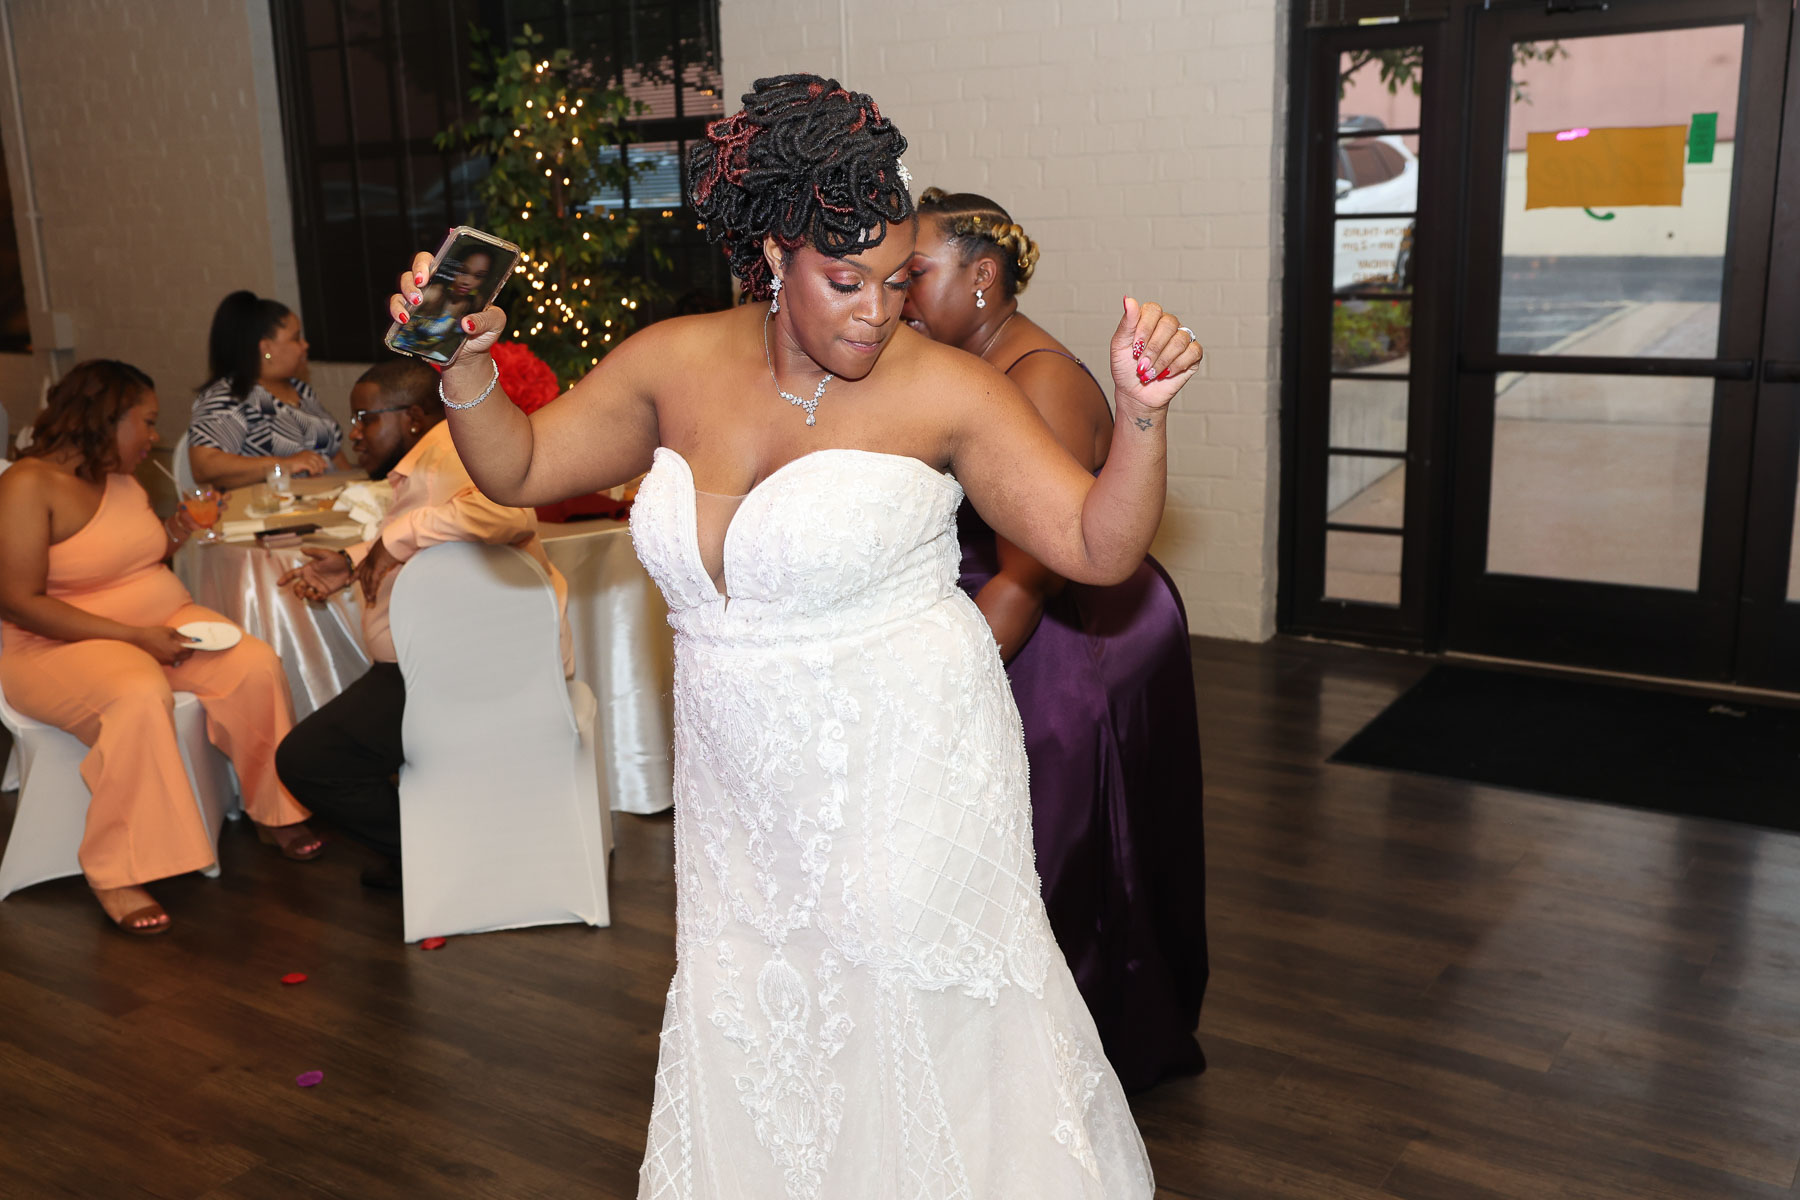 The bride swinging her hips